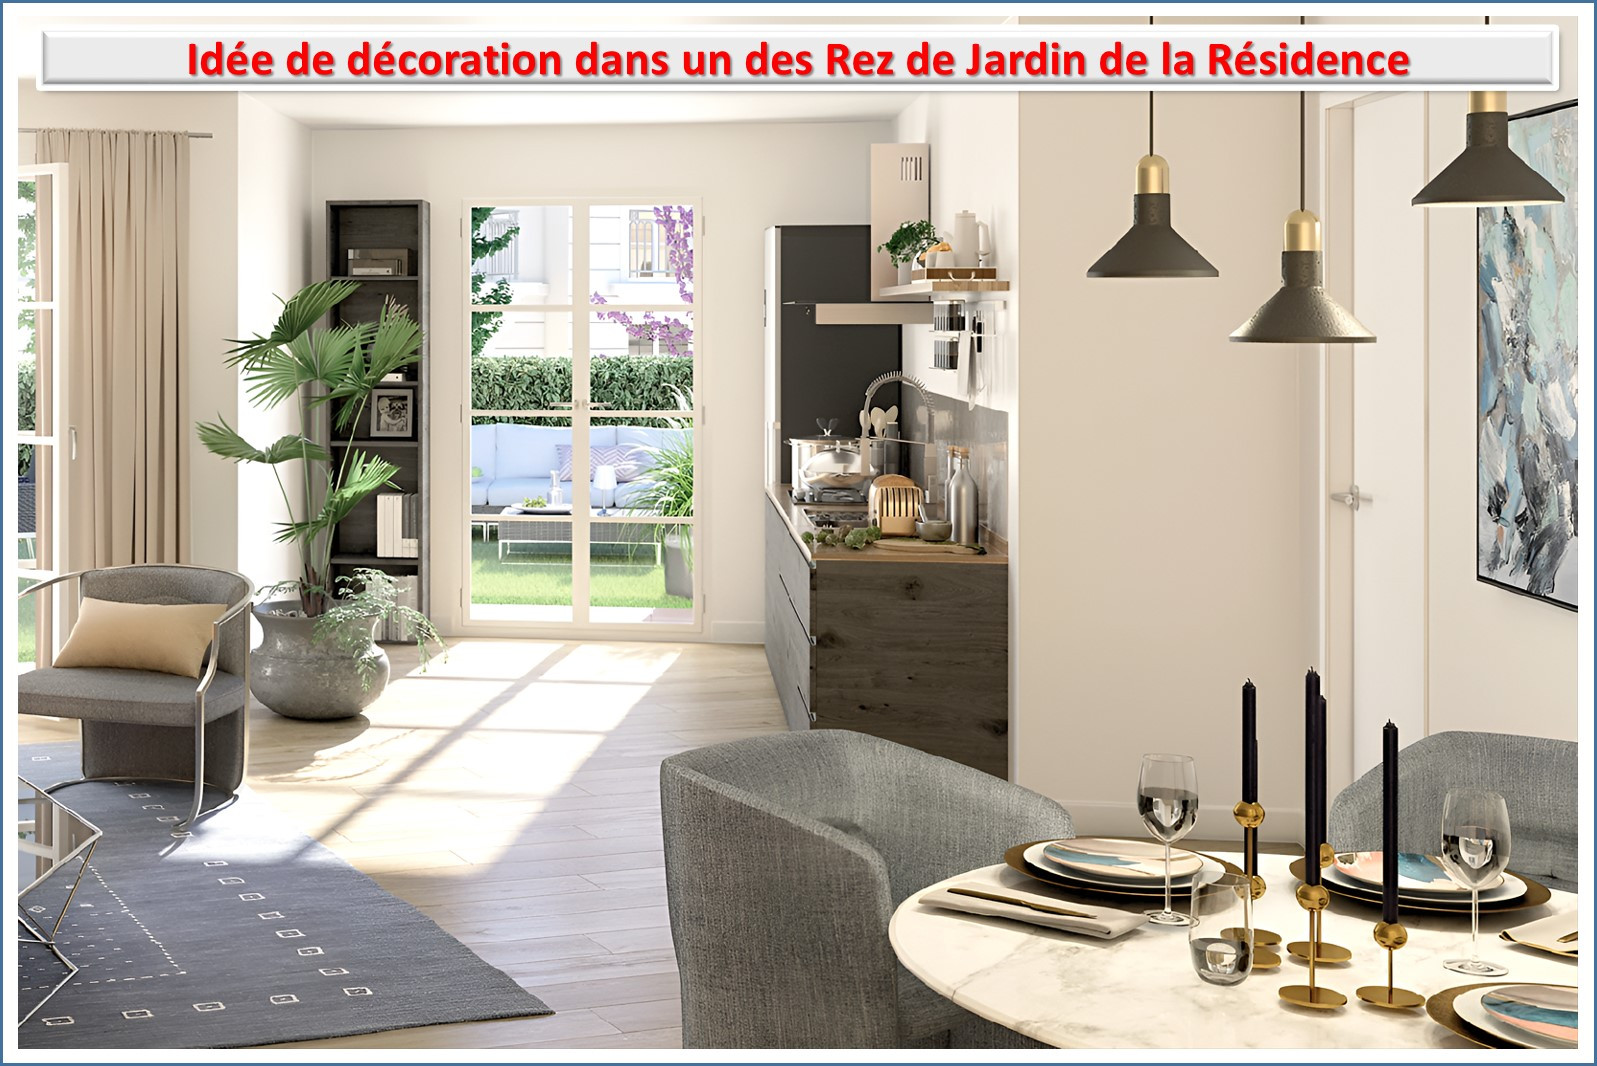 A vendre appartement Le Plessis Robinson 92350; 330 000 € 